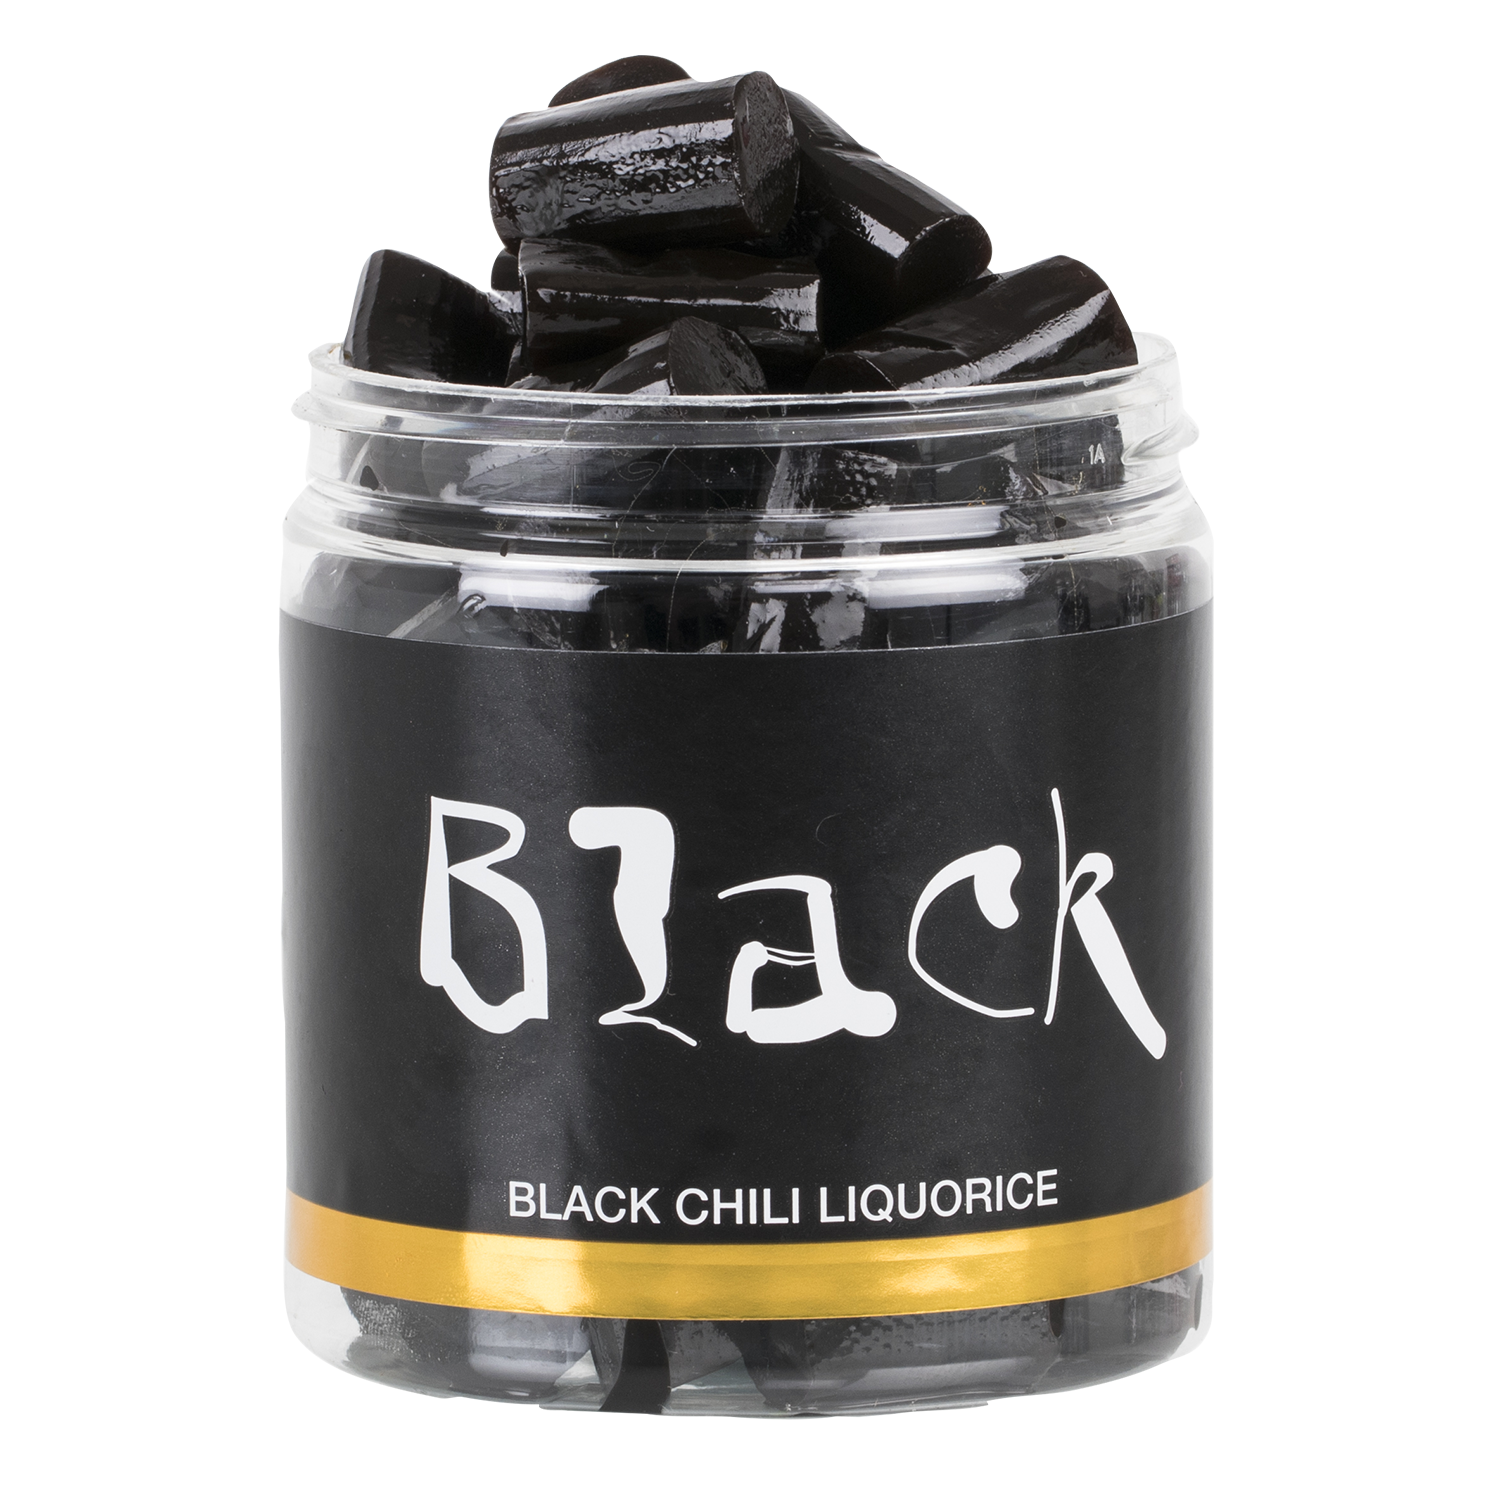 Lakrids chilismag i dåse 170g, Black liquorice